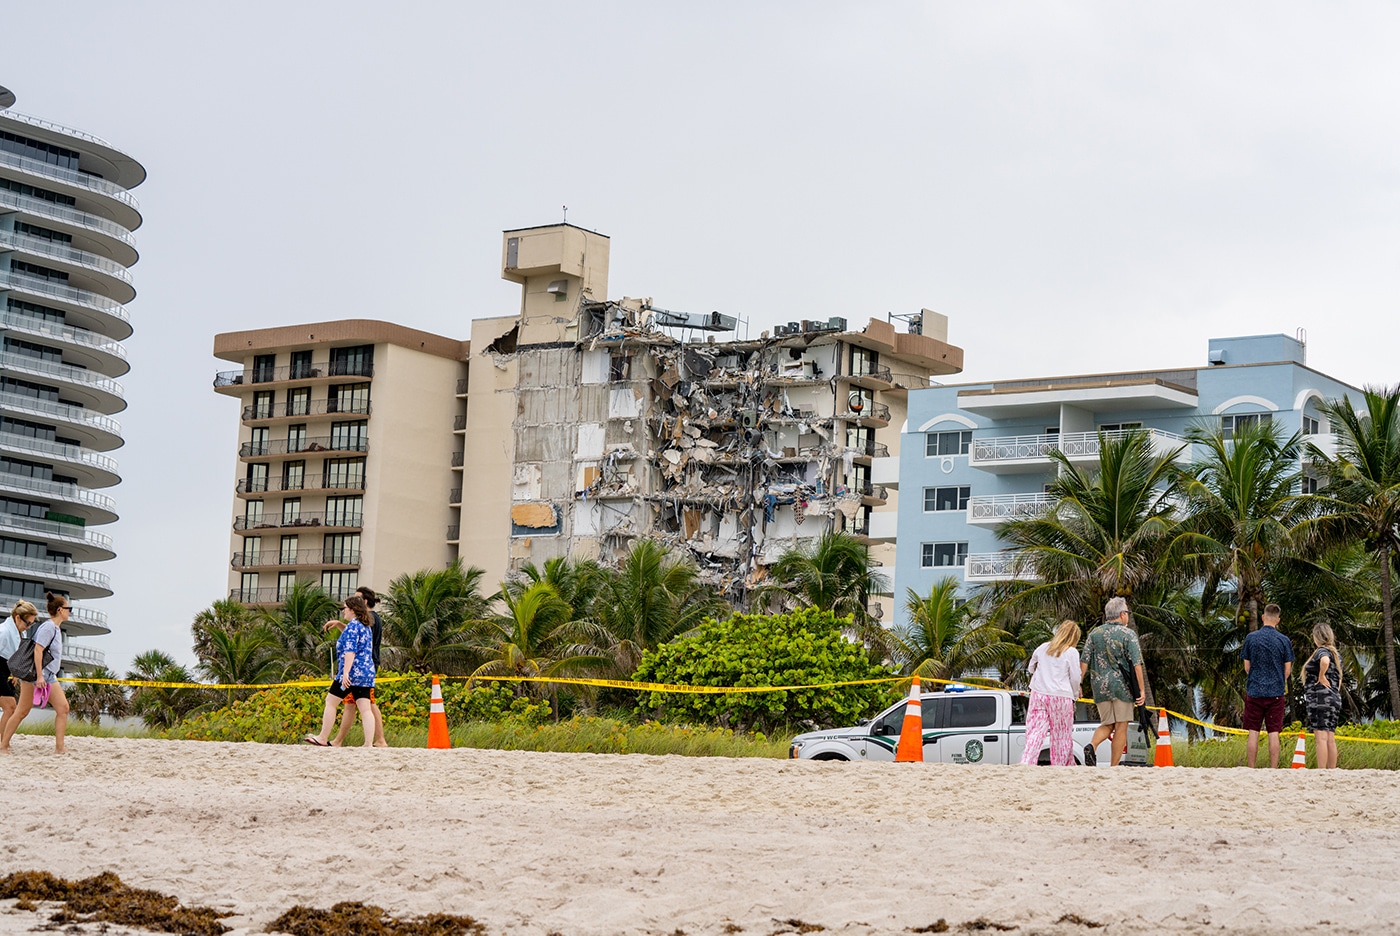 Photo of condo in Miami that collapsed